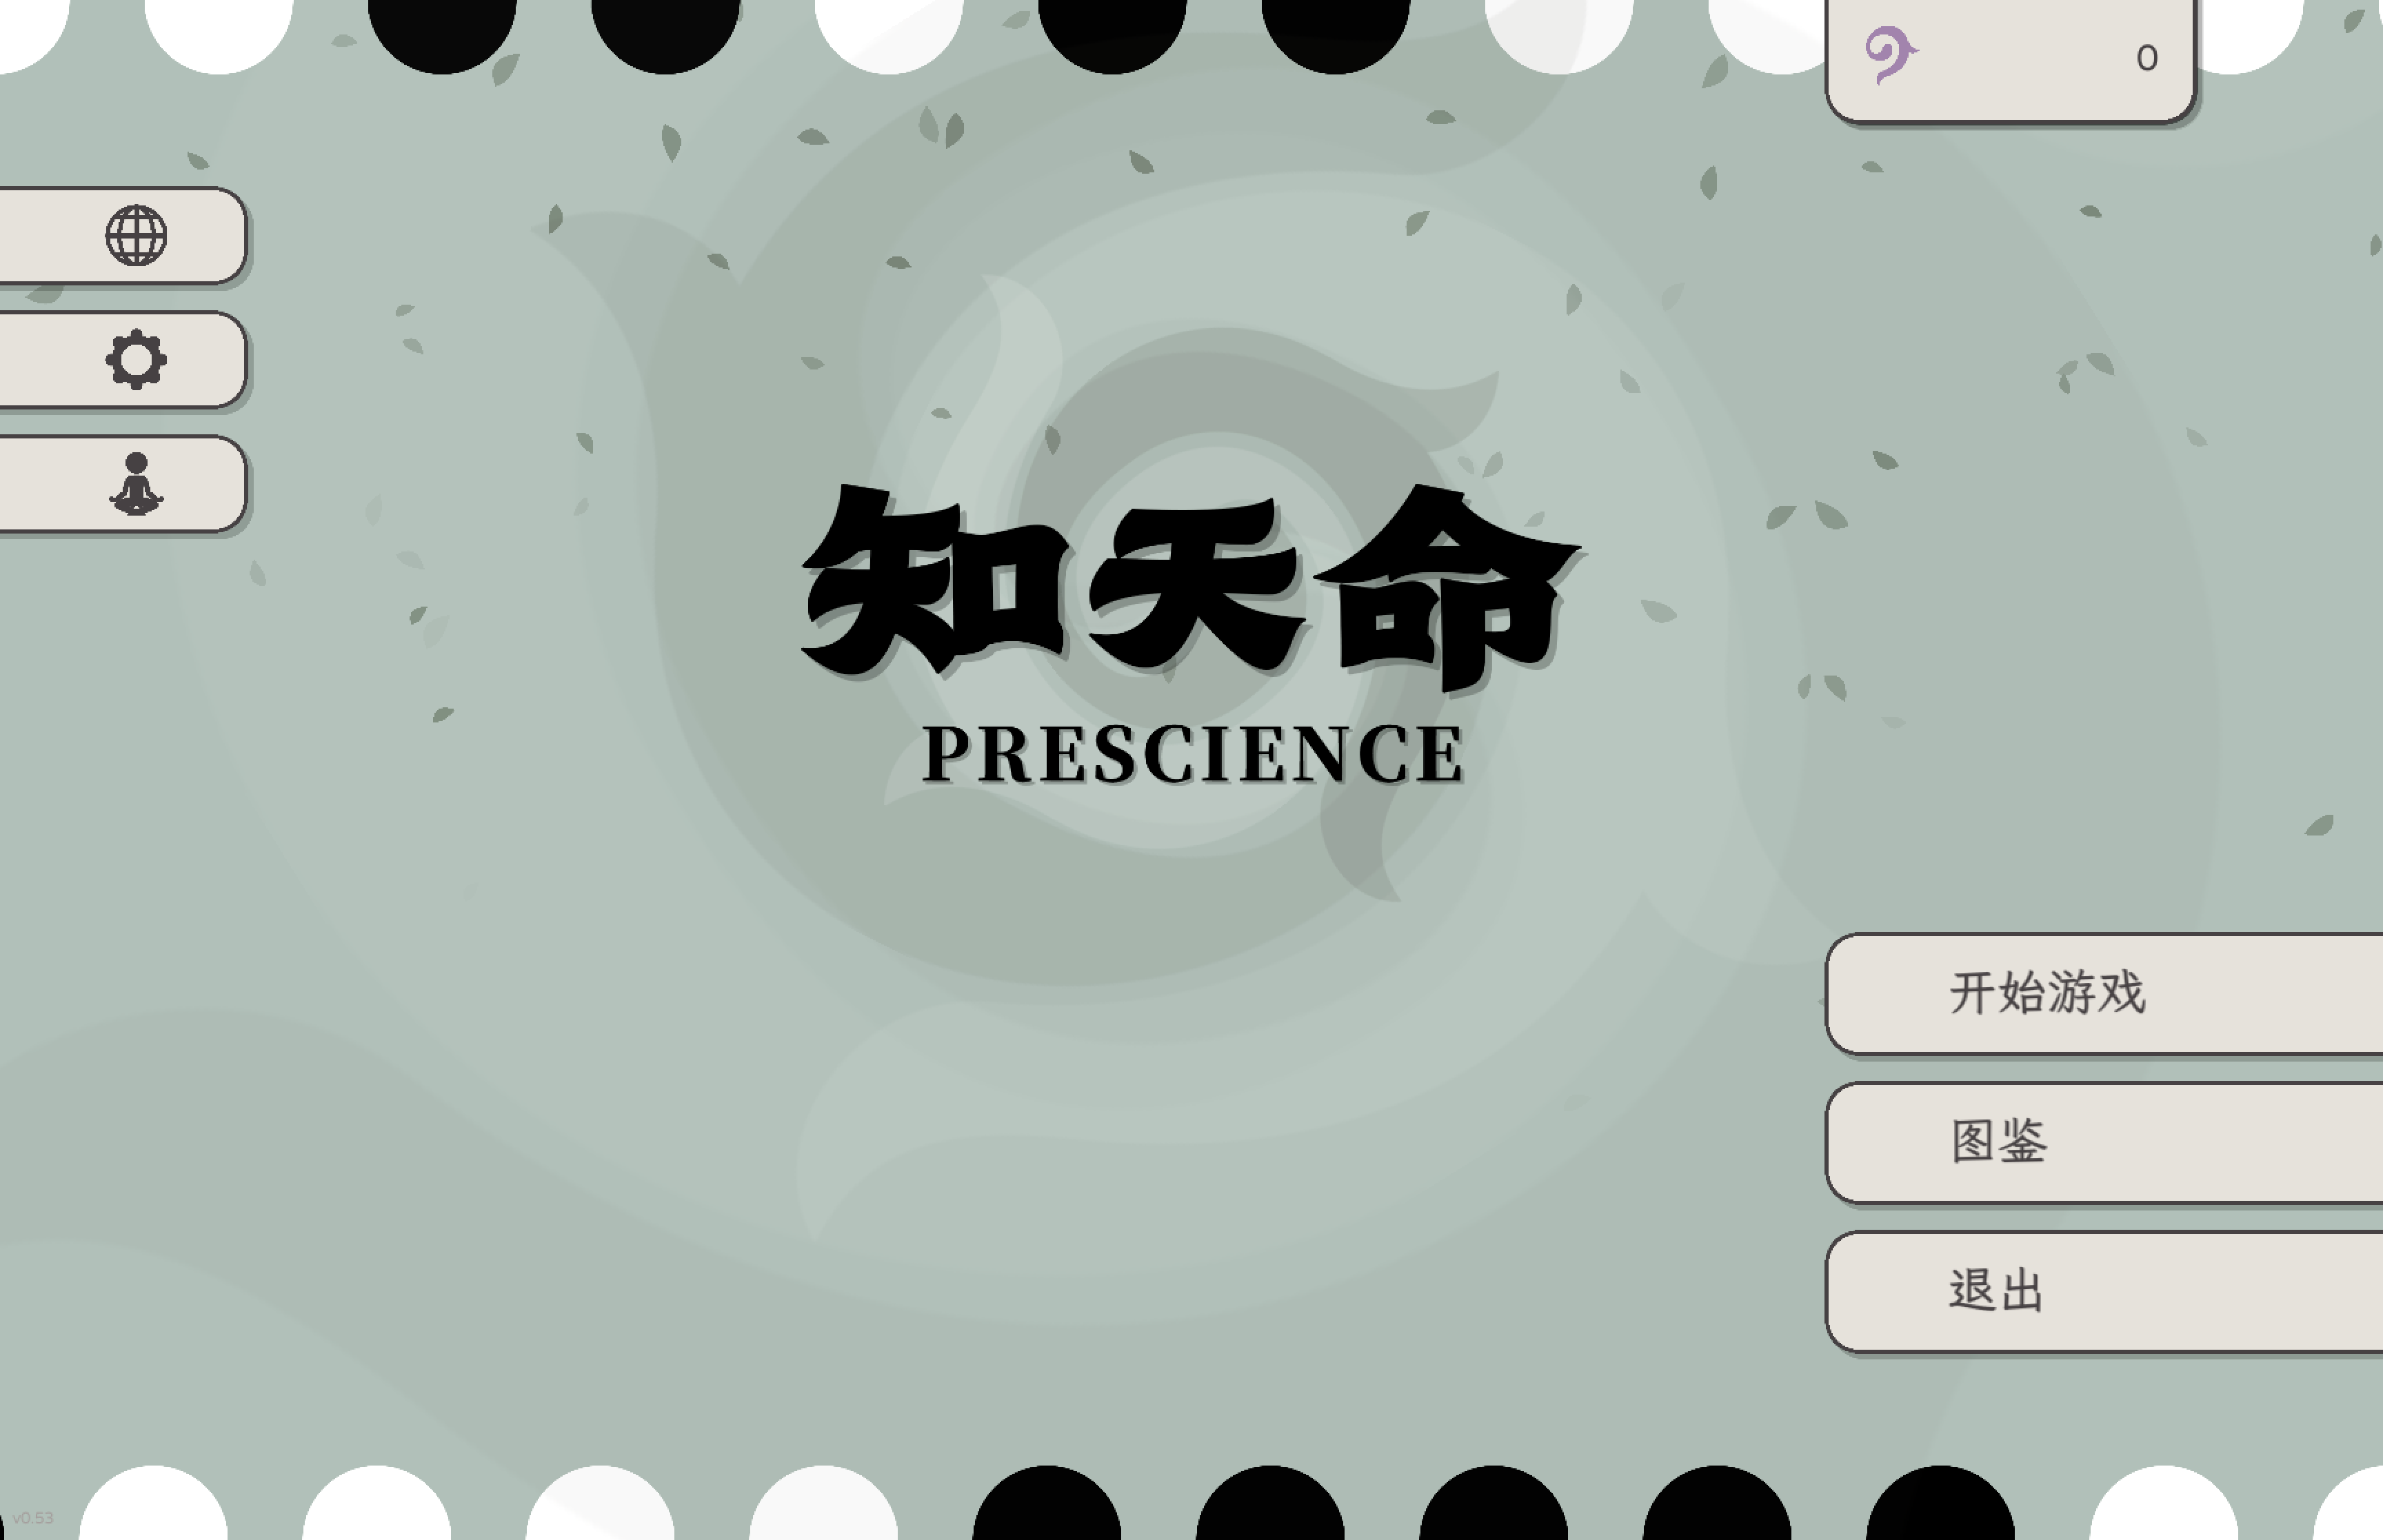 知天命 for Mac v0.53 Prescience 中文移植版 苹果电脑